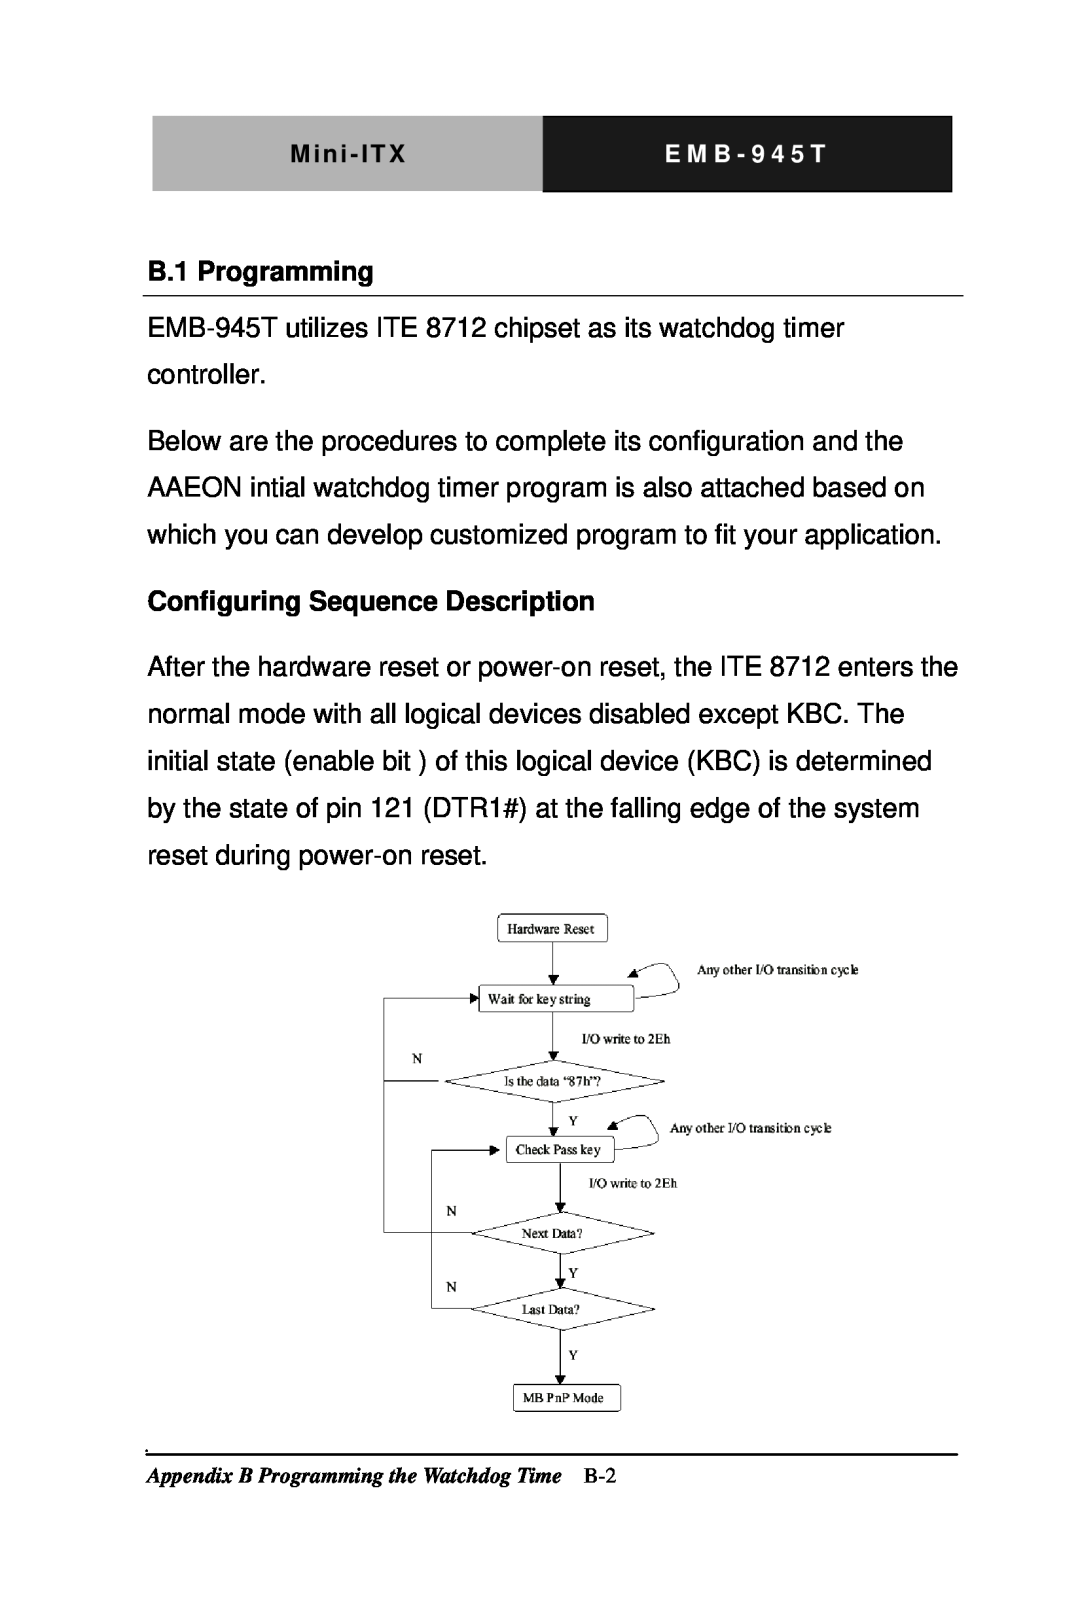 Intel EMB-945T manual B.1 Programming, Configuring Sequence Description, Appendix B Programming the Watchdog Time B-2 